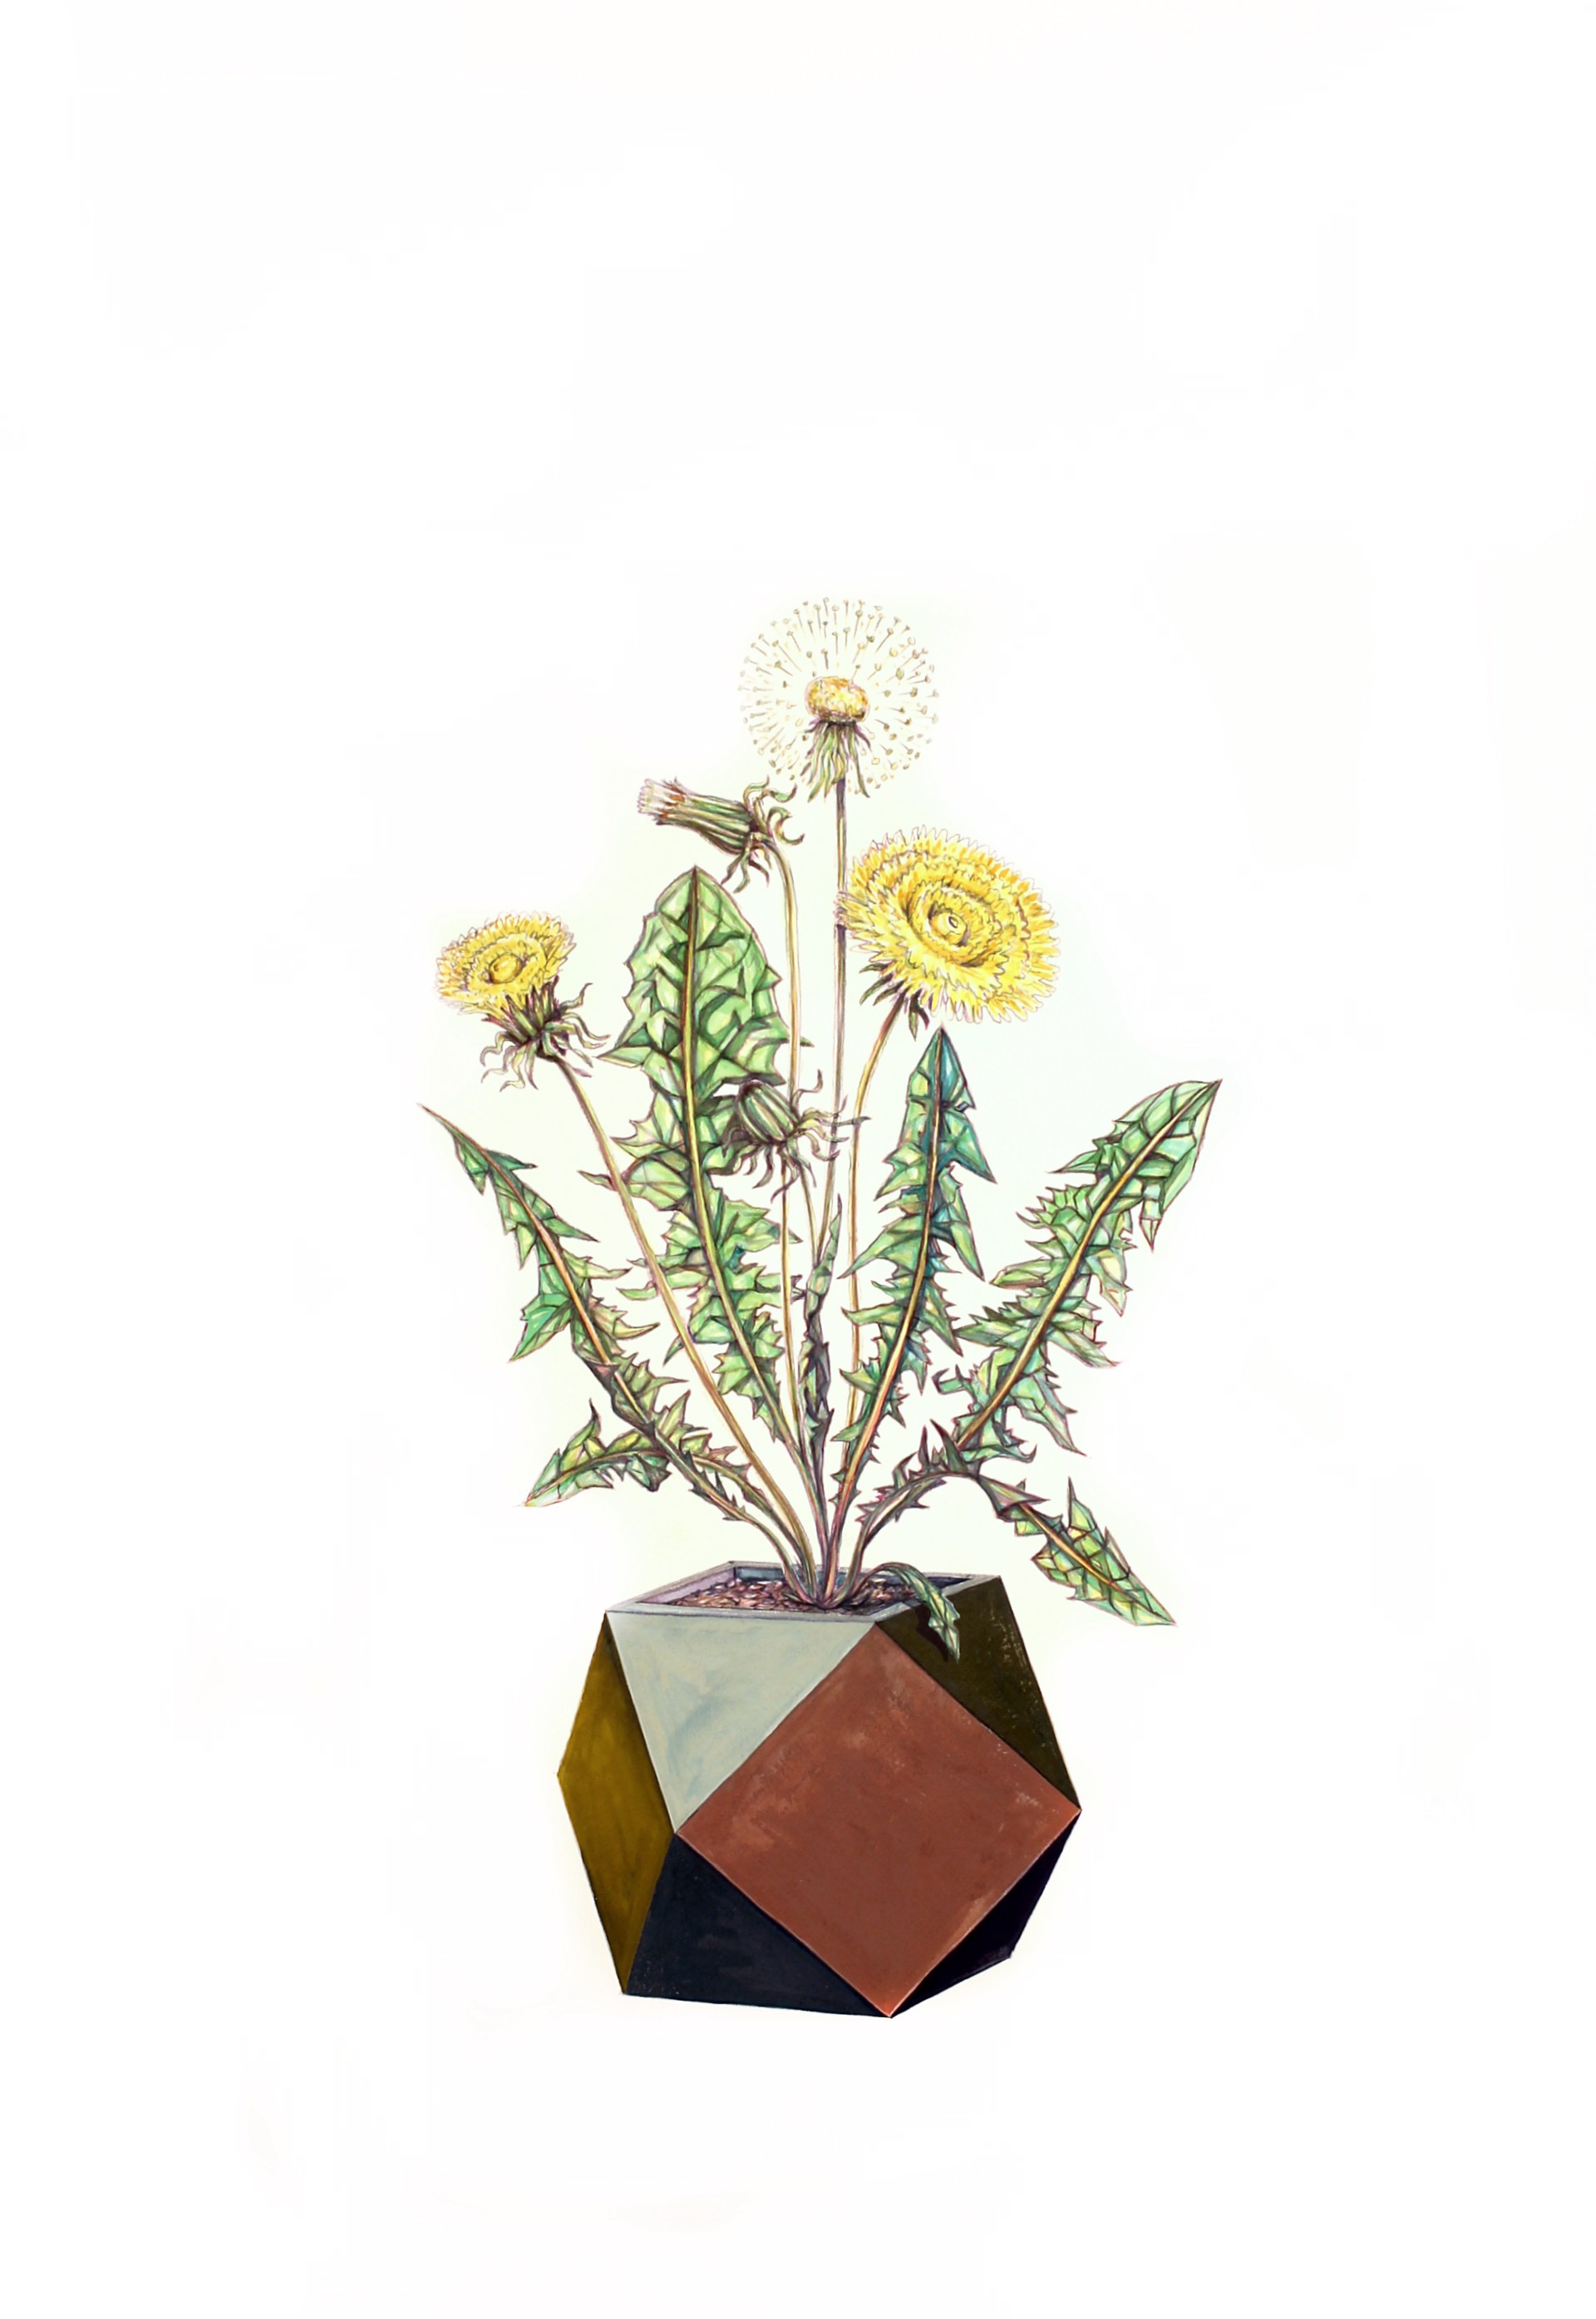 Dandelion Vase II by Todd Ryan White